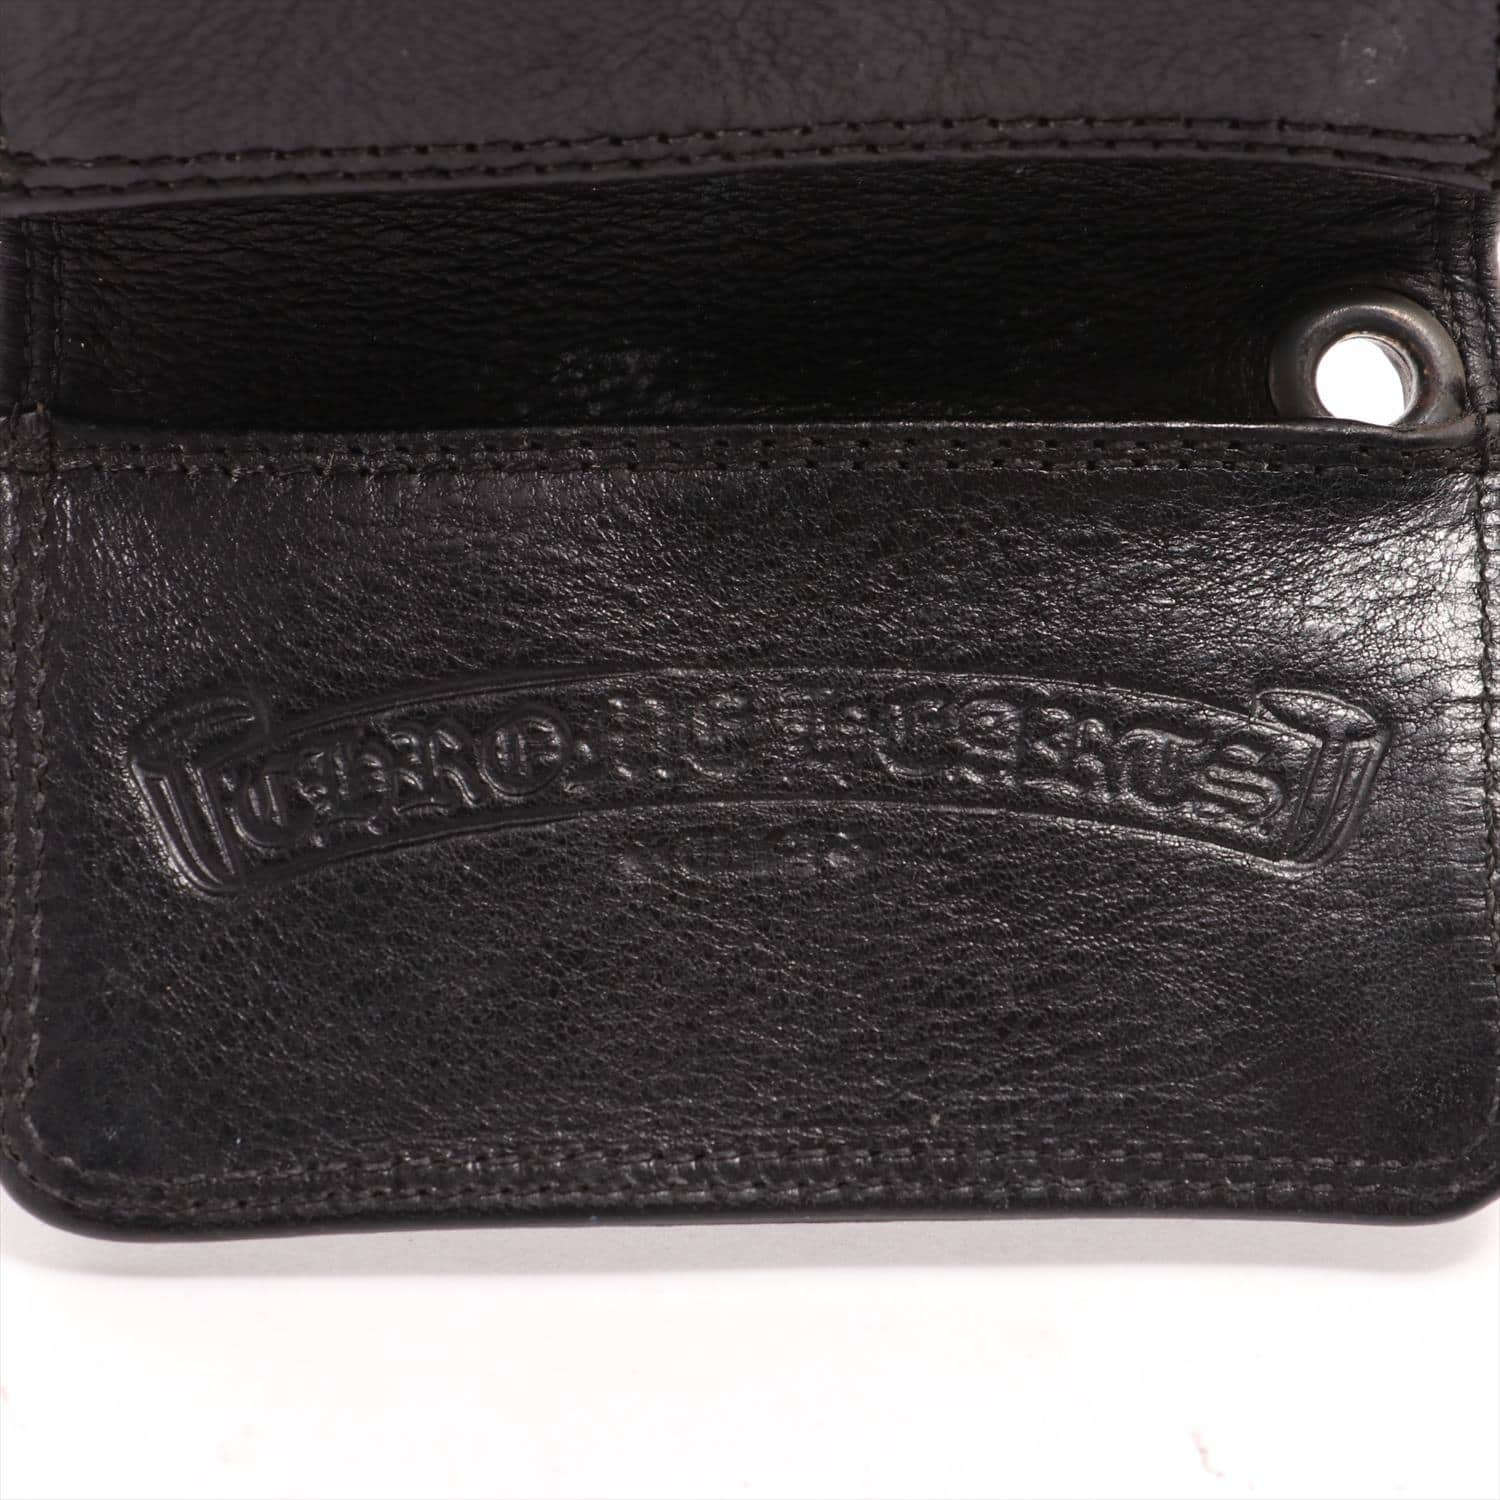 Chrome Hearts Card case Leather